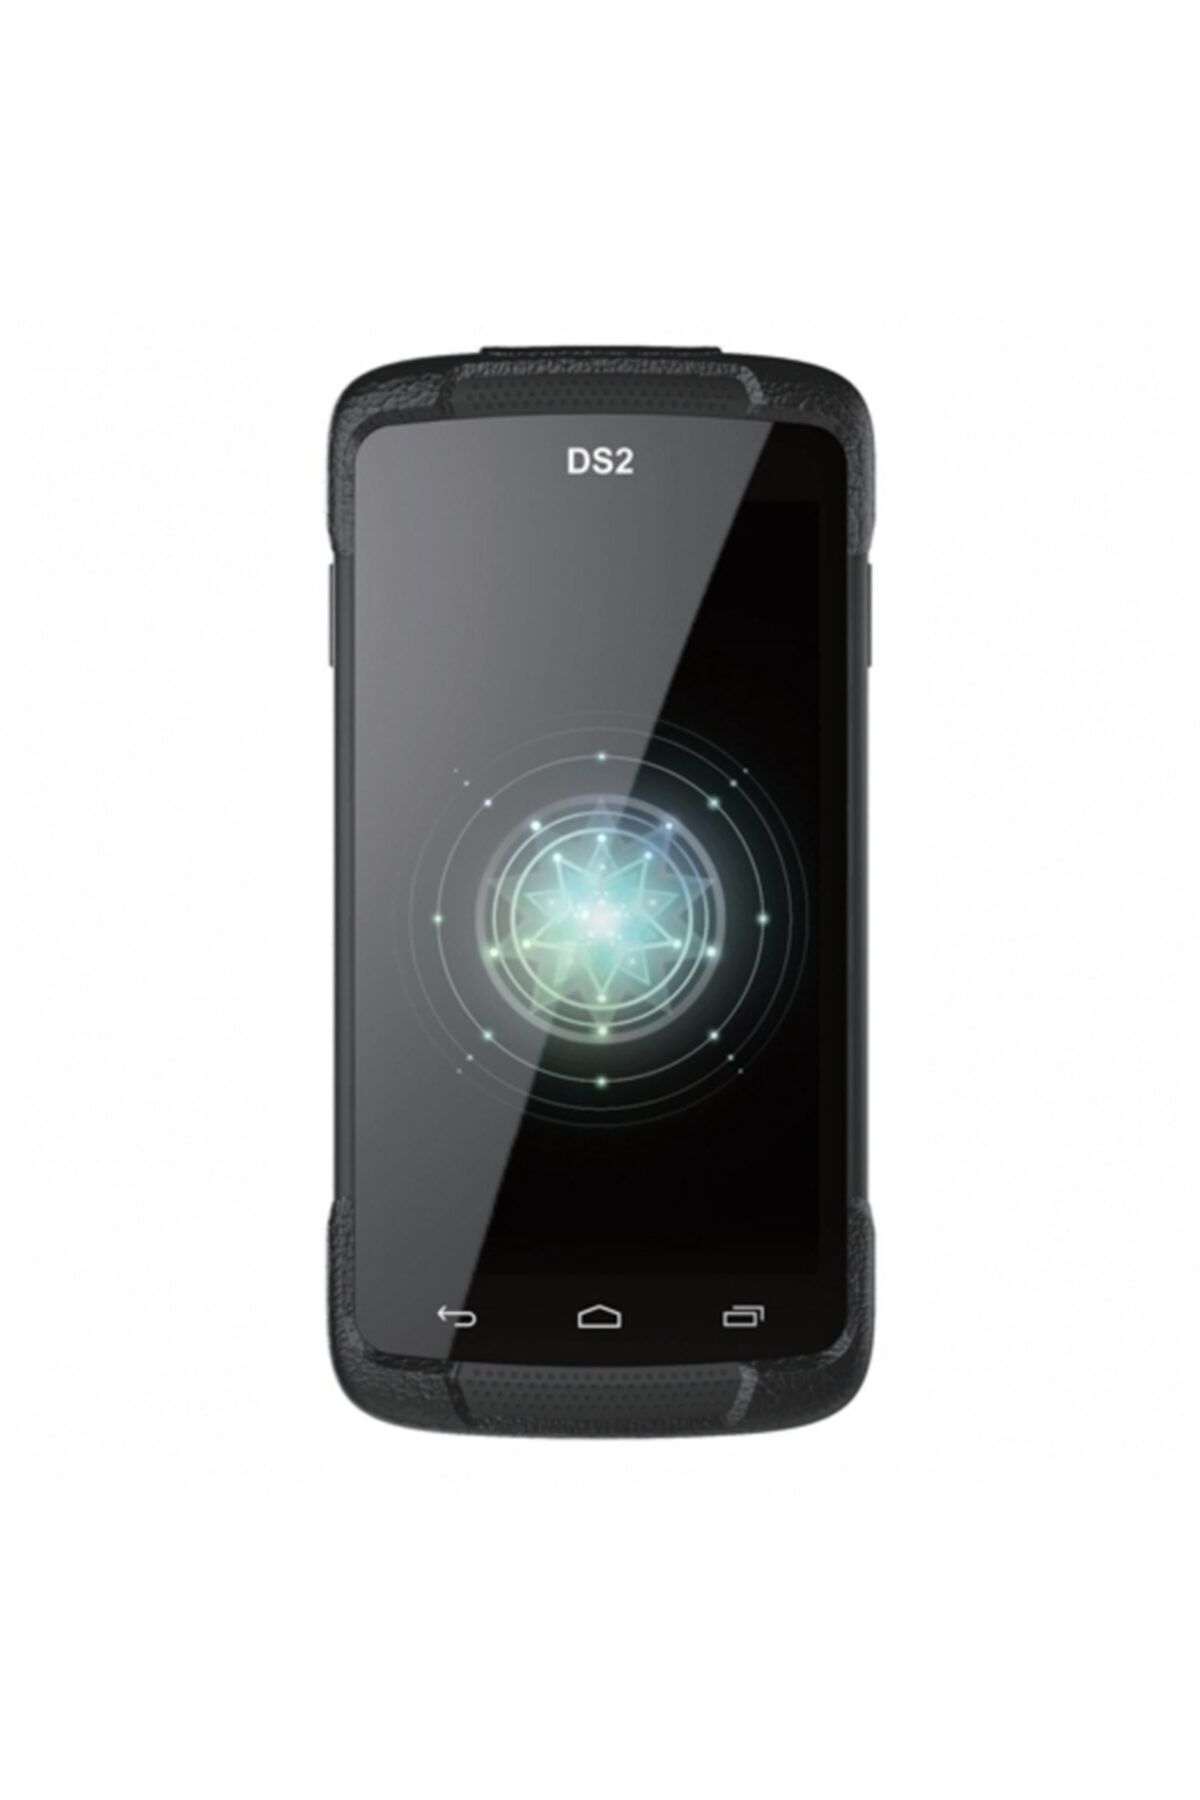 DSIC Ds2 Android El Terminali